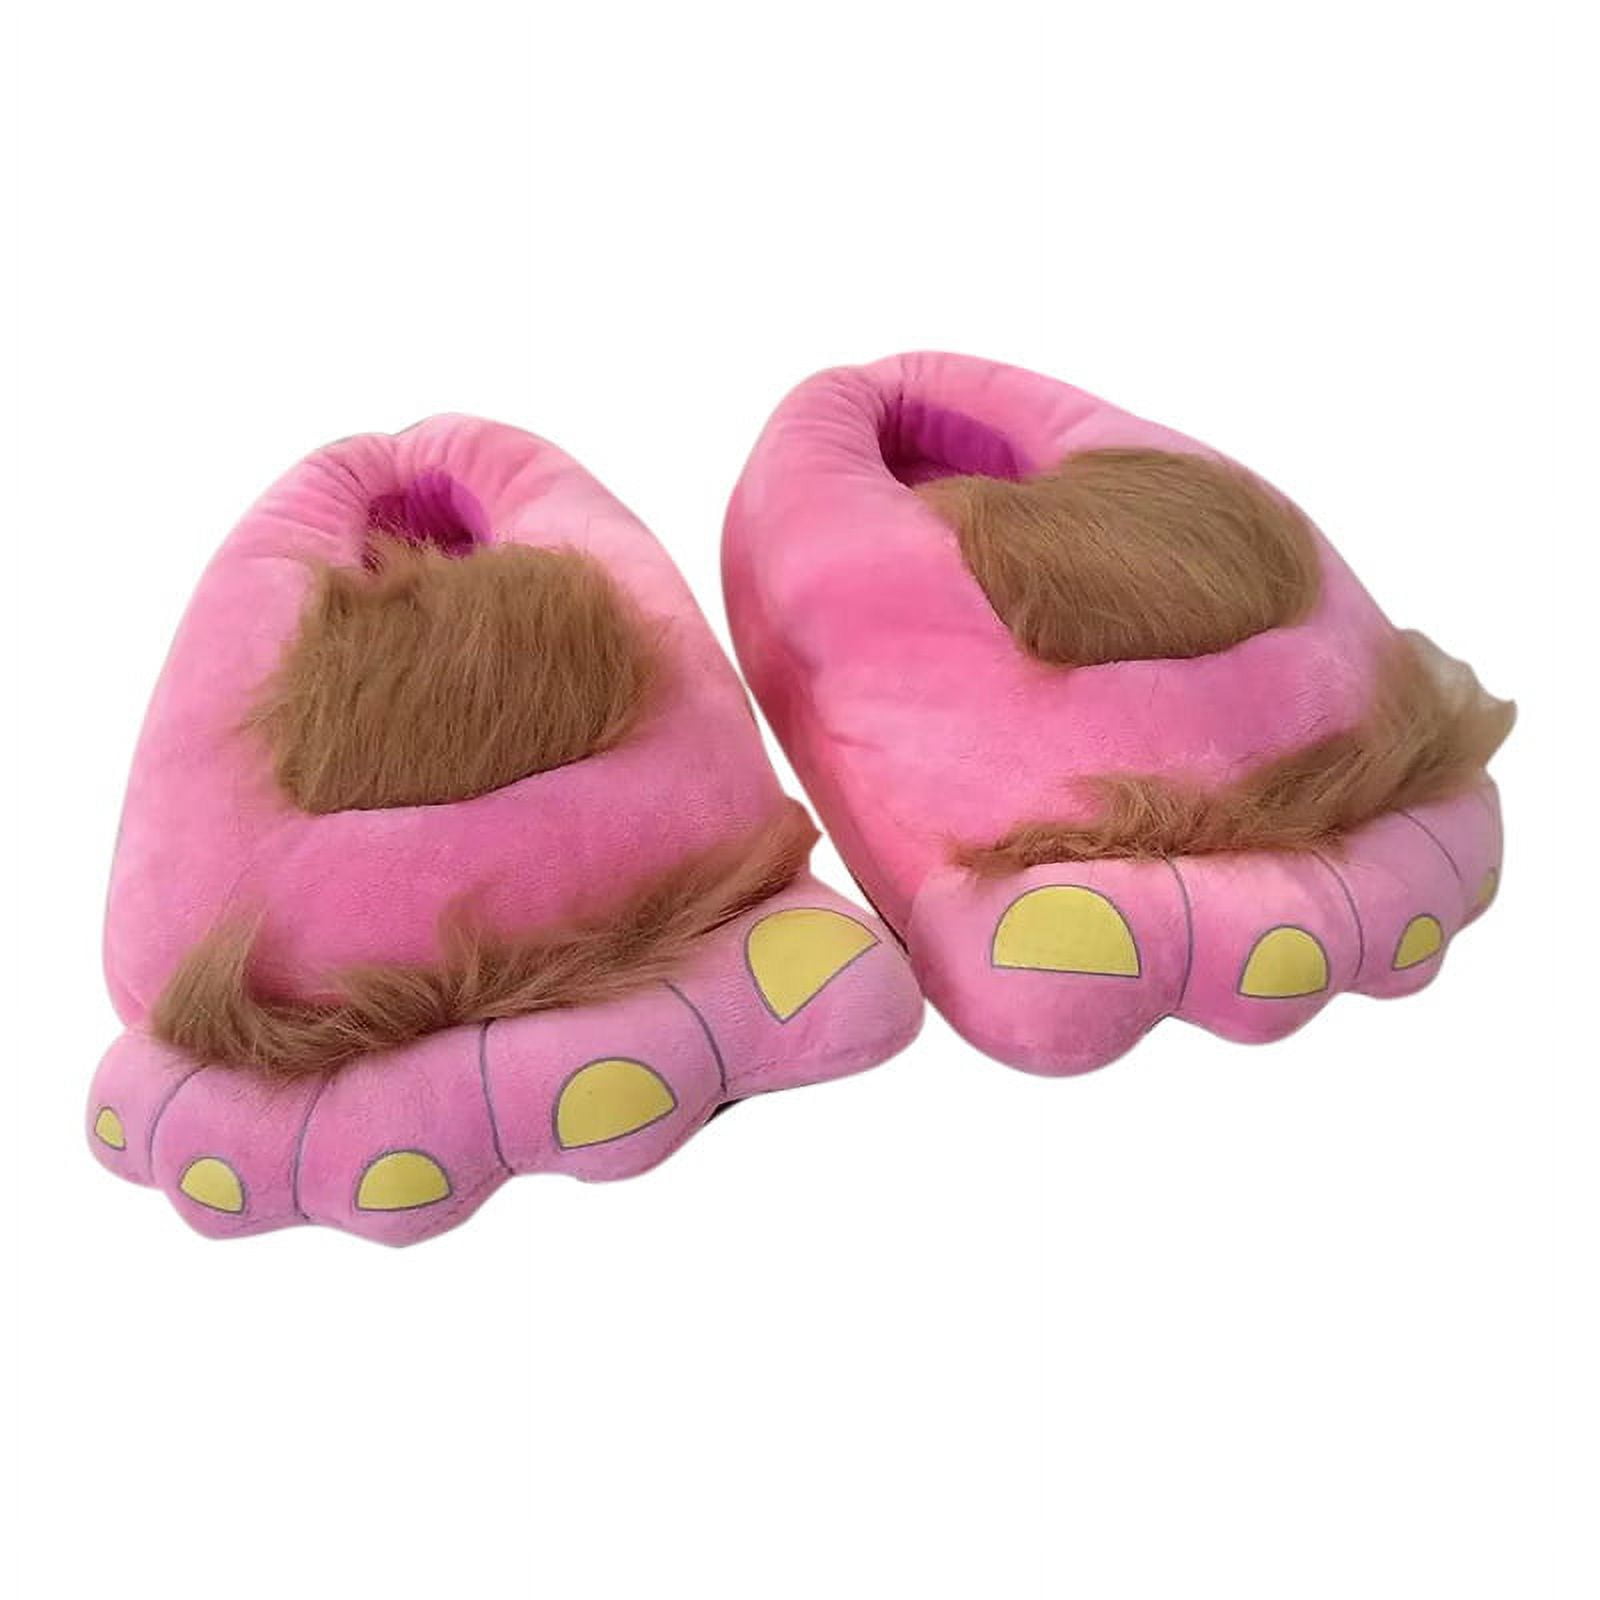 HRSR Furry Warm Slippers Big Hairy Unisex Savage Hobbit Feet Plush Home Slippers Halloween Shoes Pink ad793e0a 00ea 4f91 b119 7c5ac5b9595c.f01ecd8e43480a9991dd92ec021e5d89